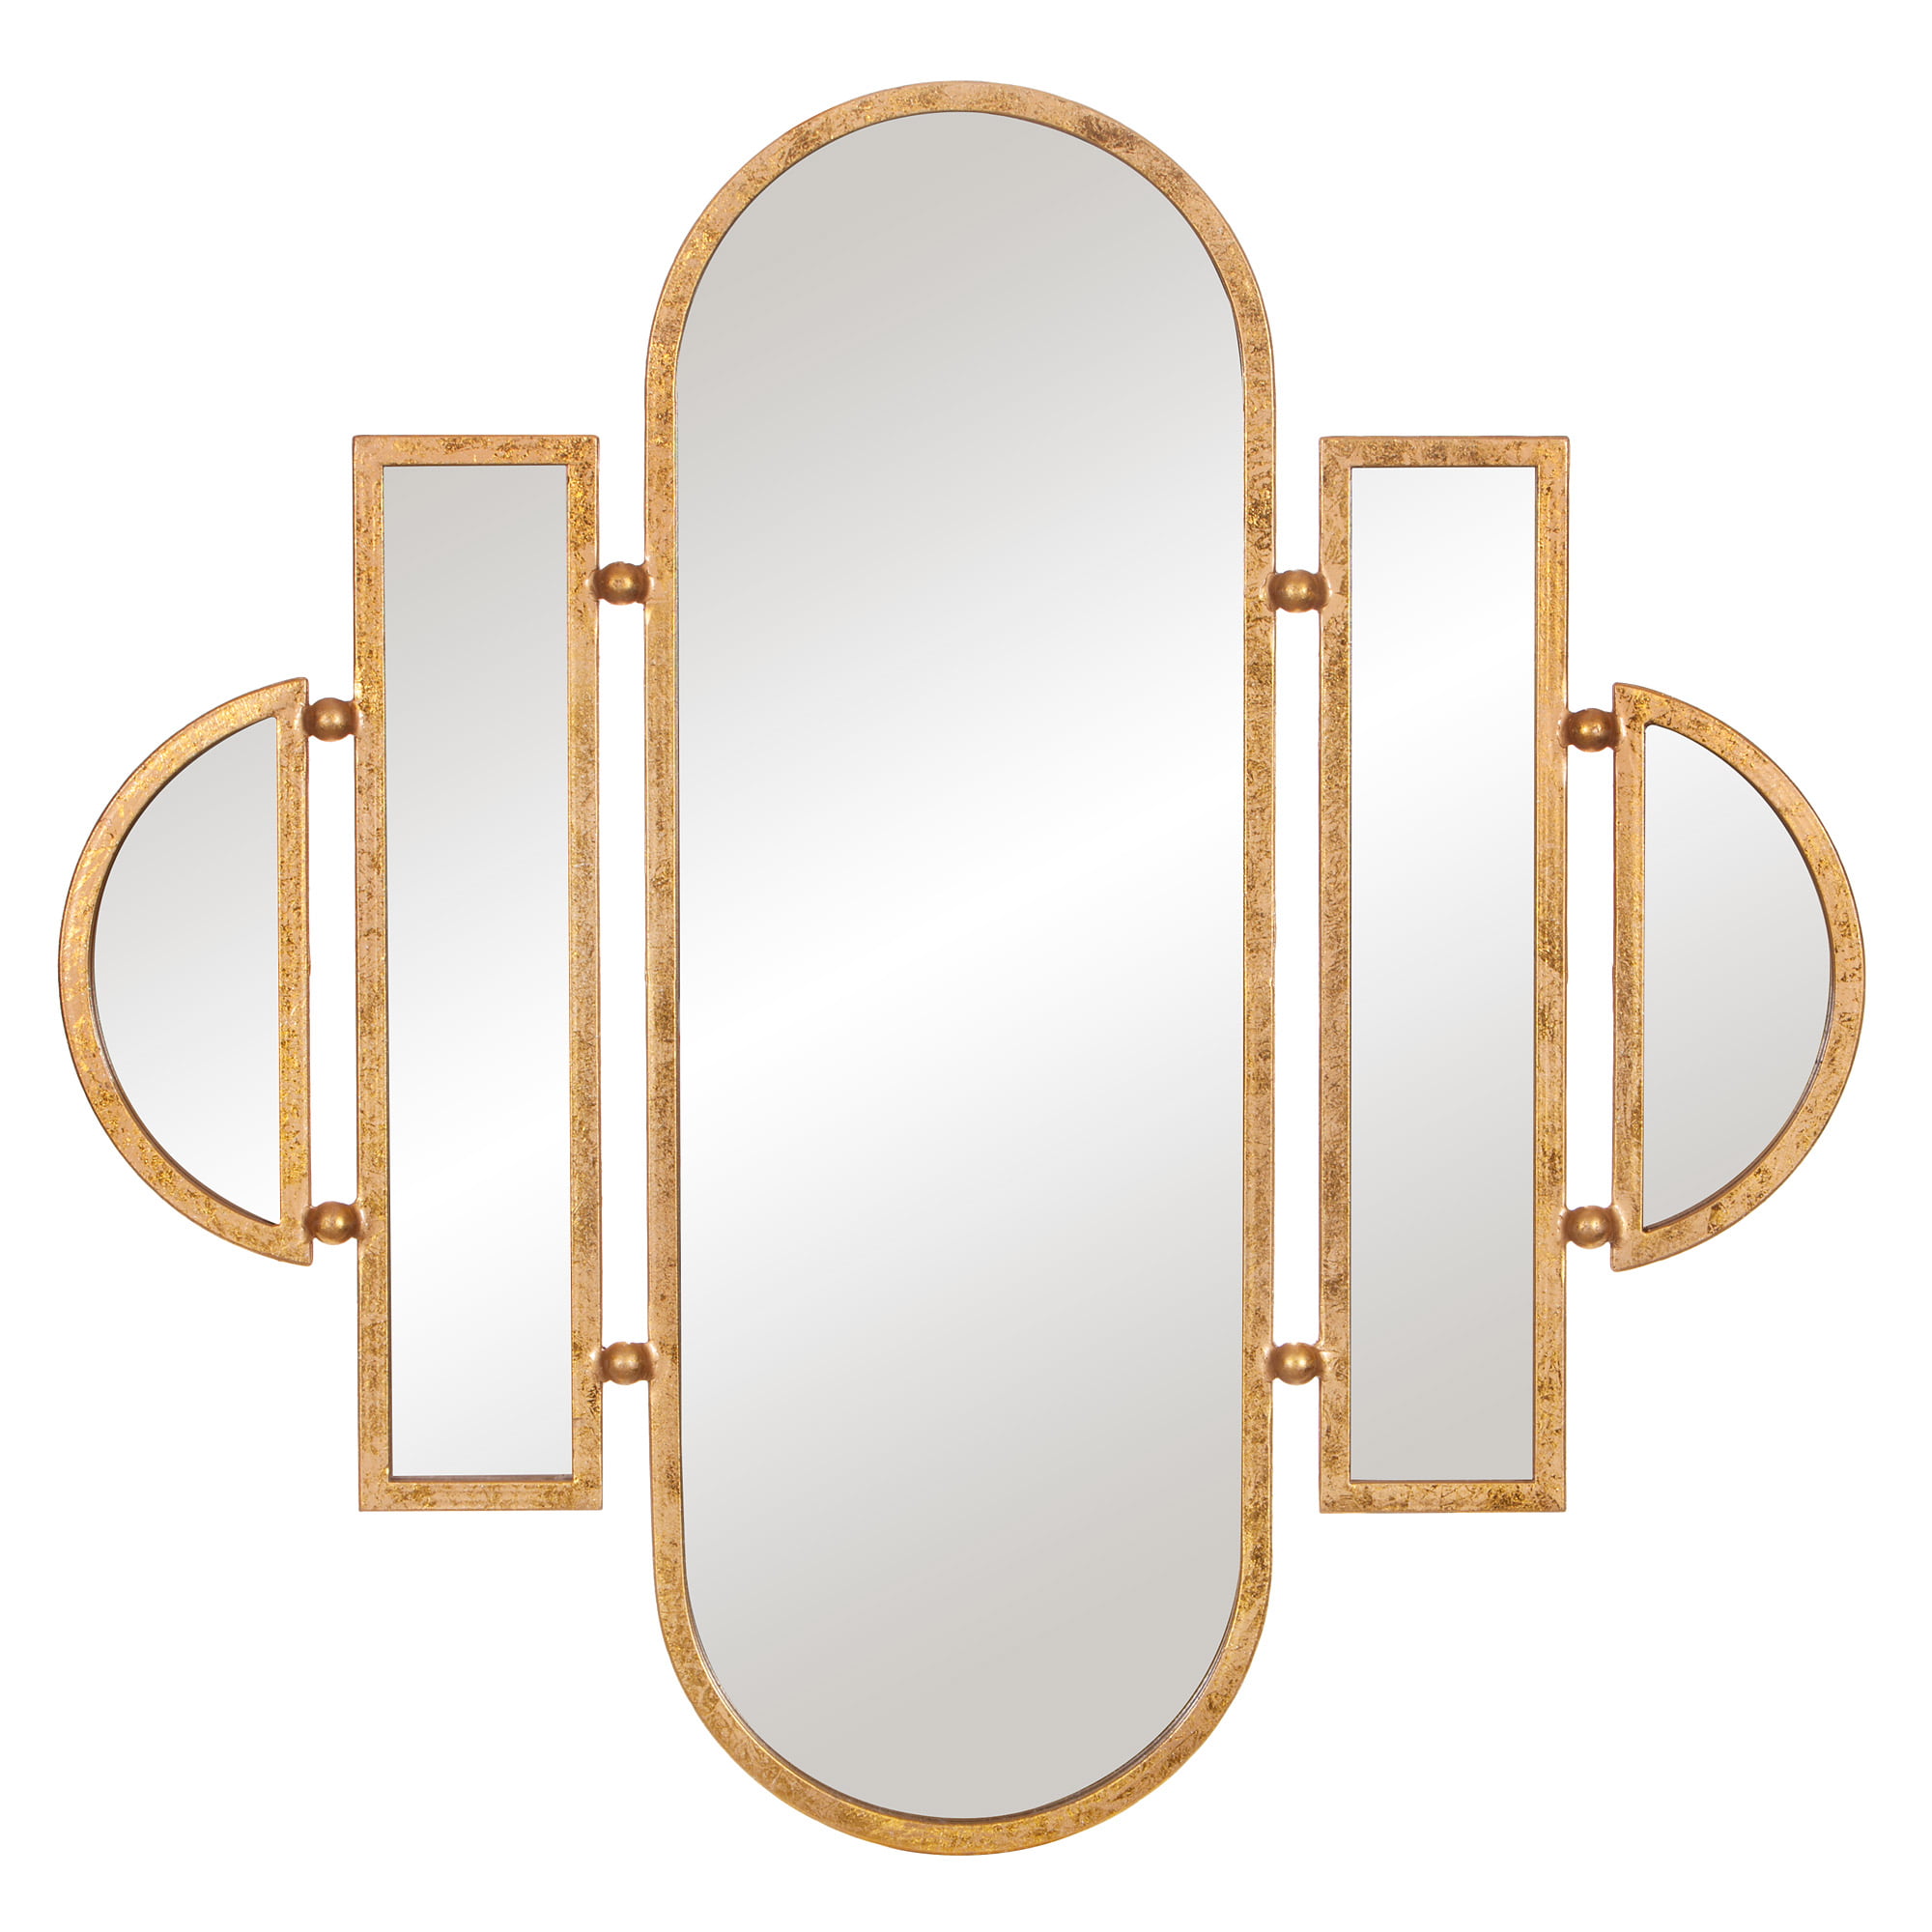 Patton Wall Decor Geometric Oval Vanity Wall Mirror, Antique Gold, 30